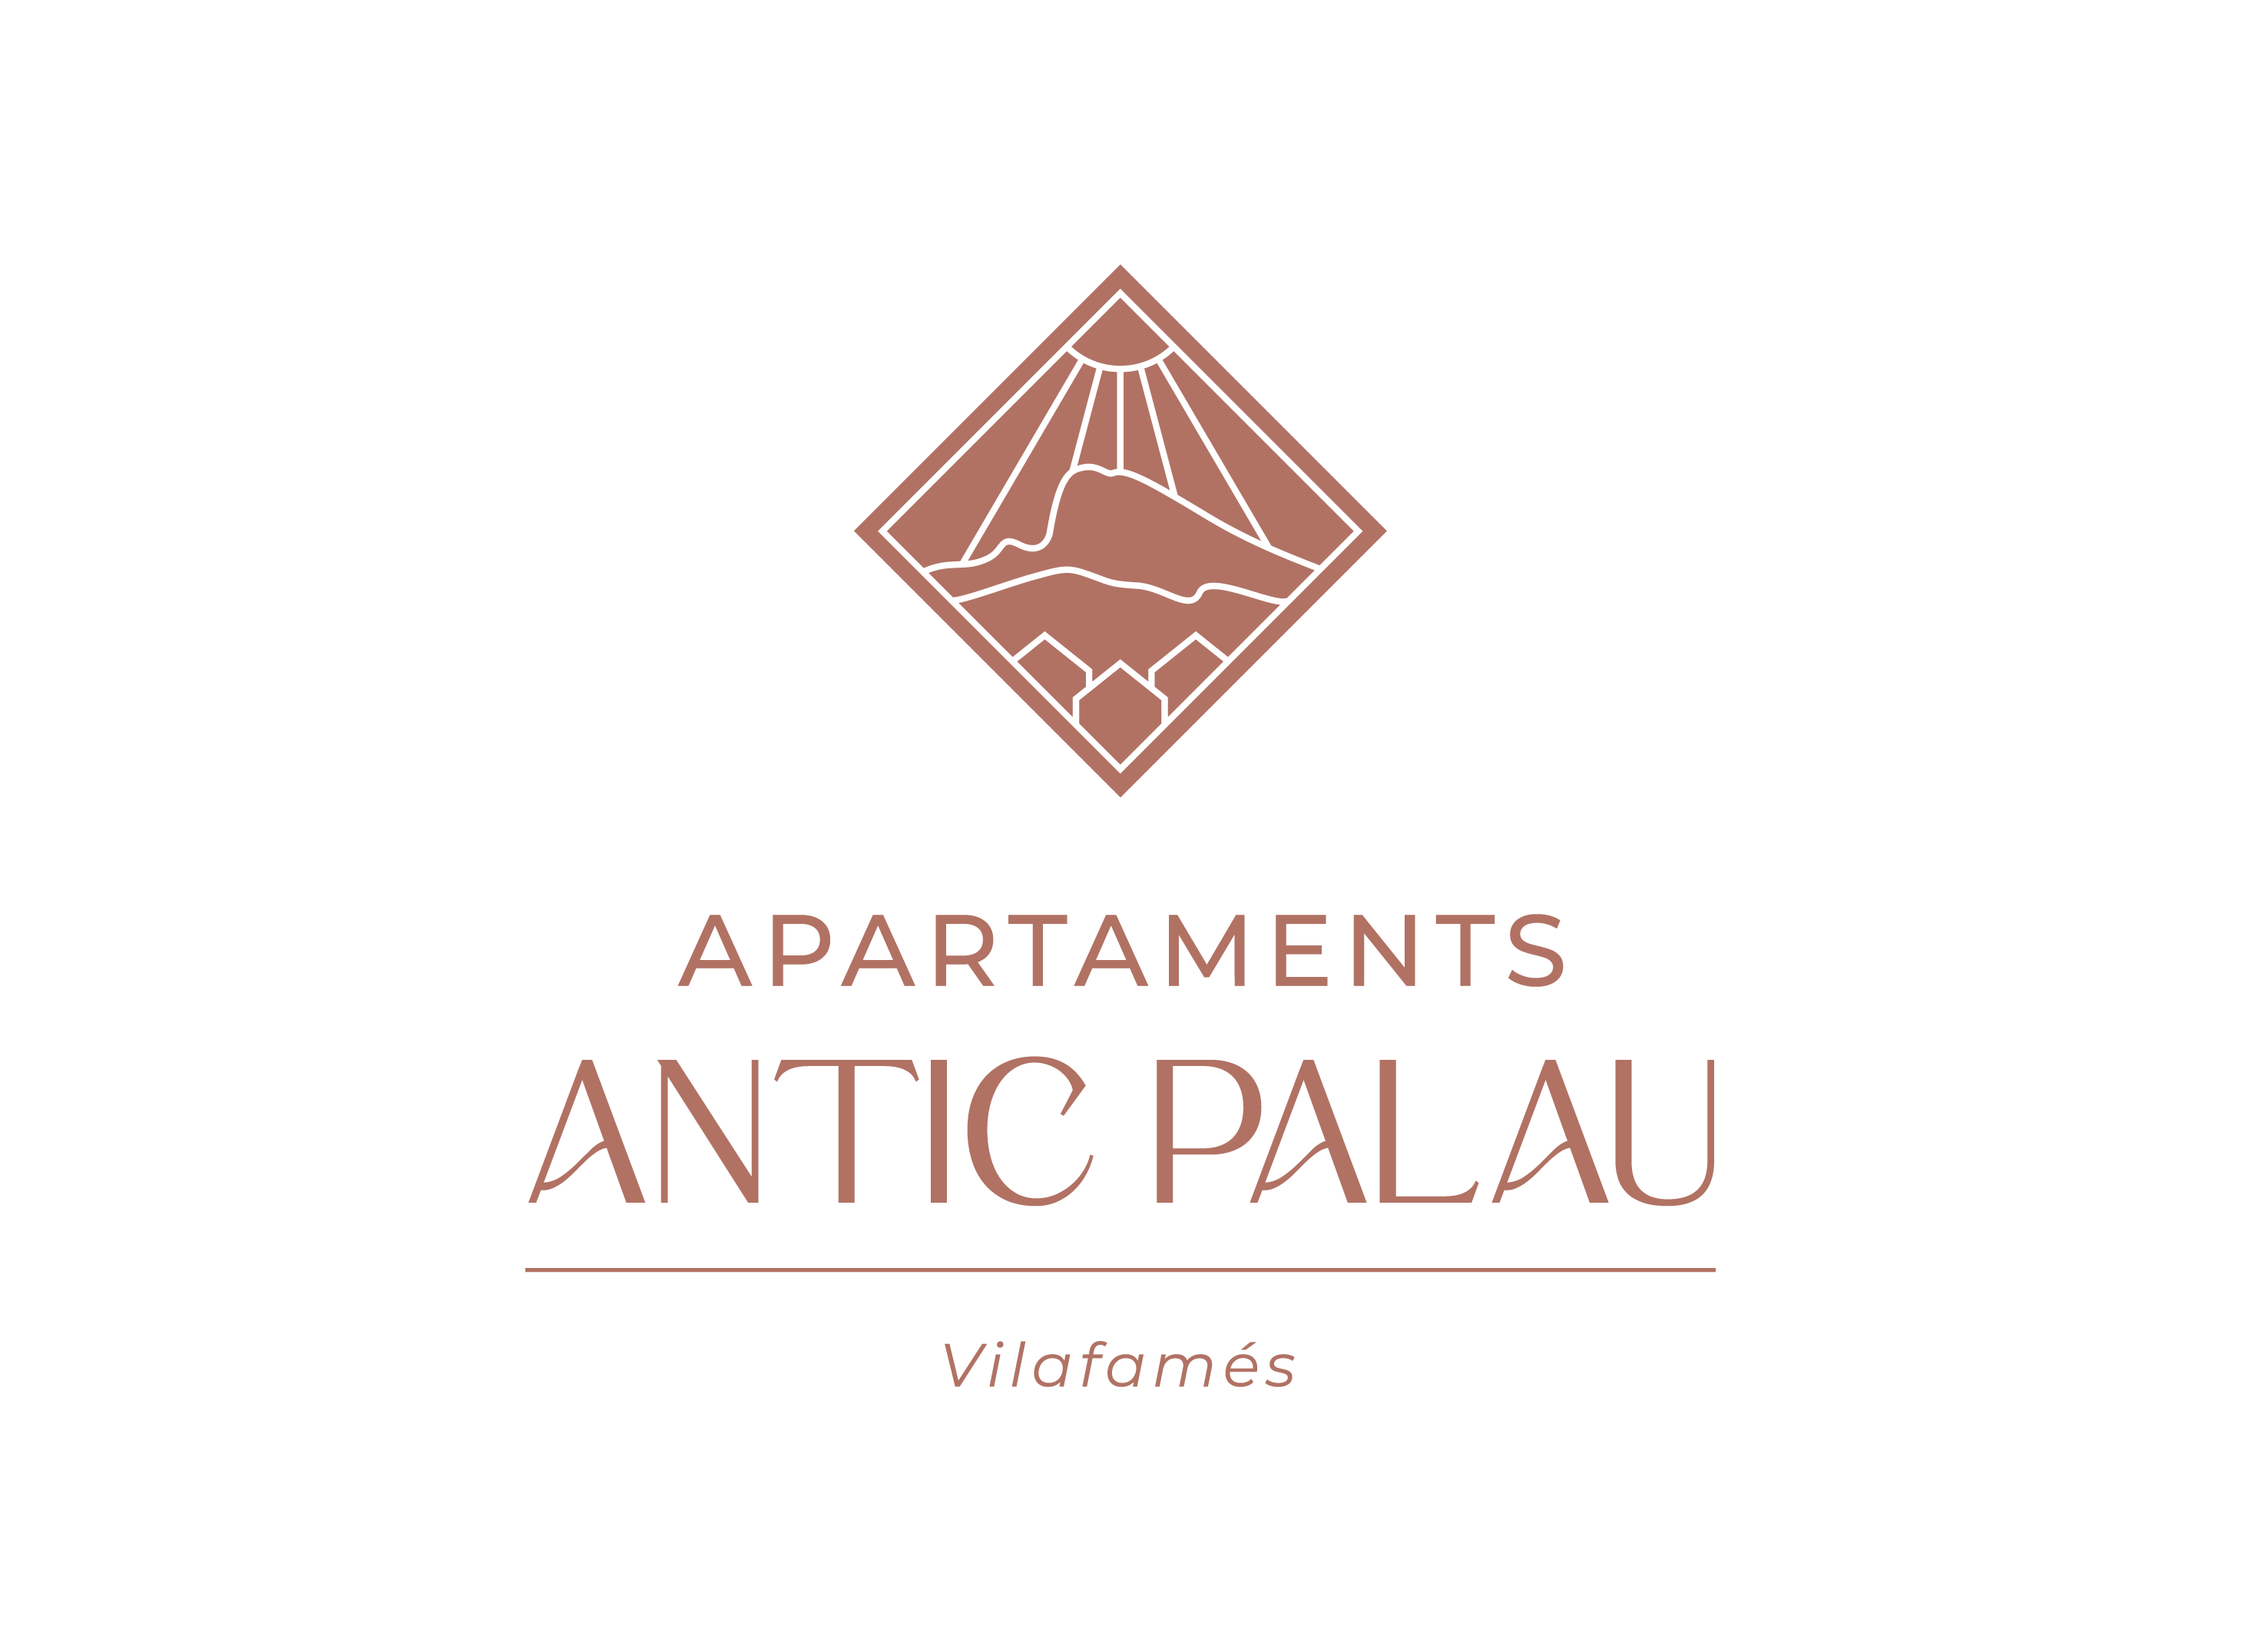 Apartamentos Vilafamés Antic Palau Logo